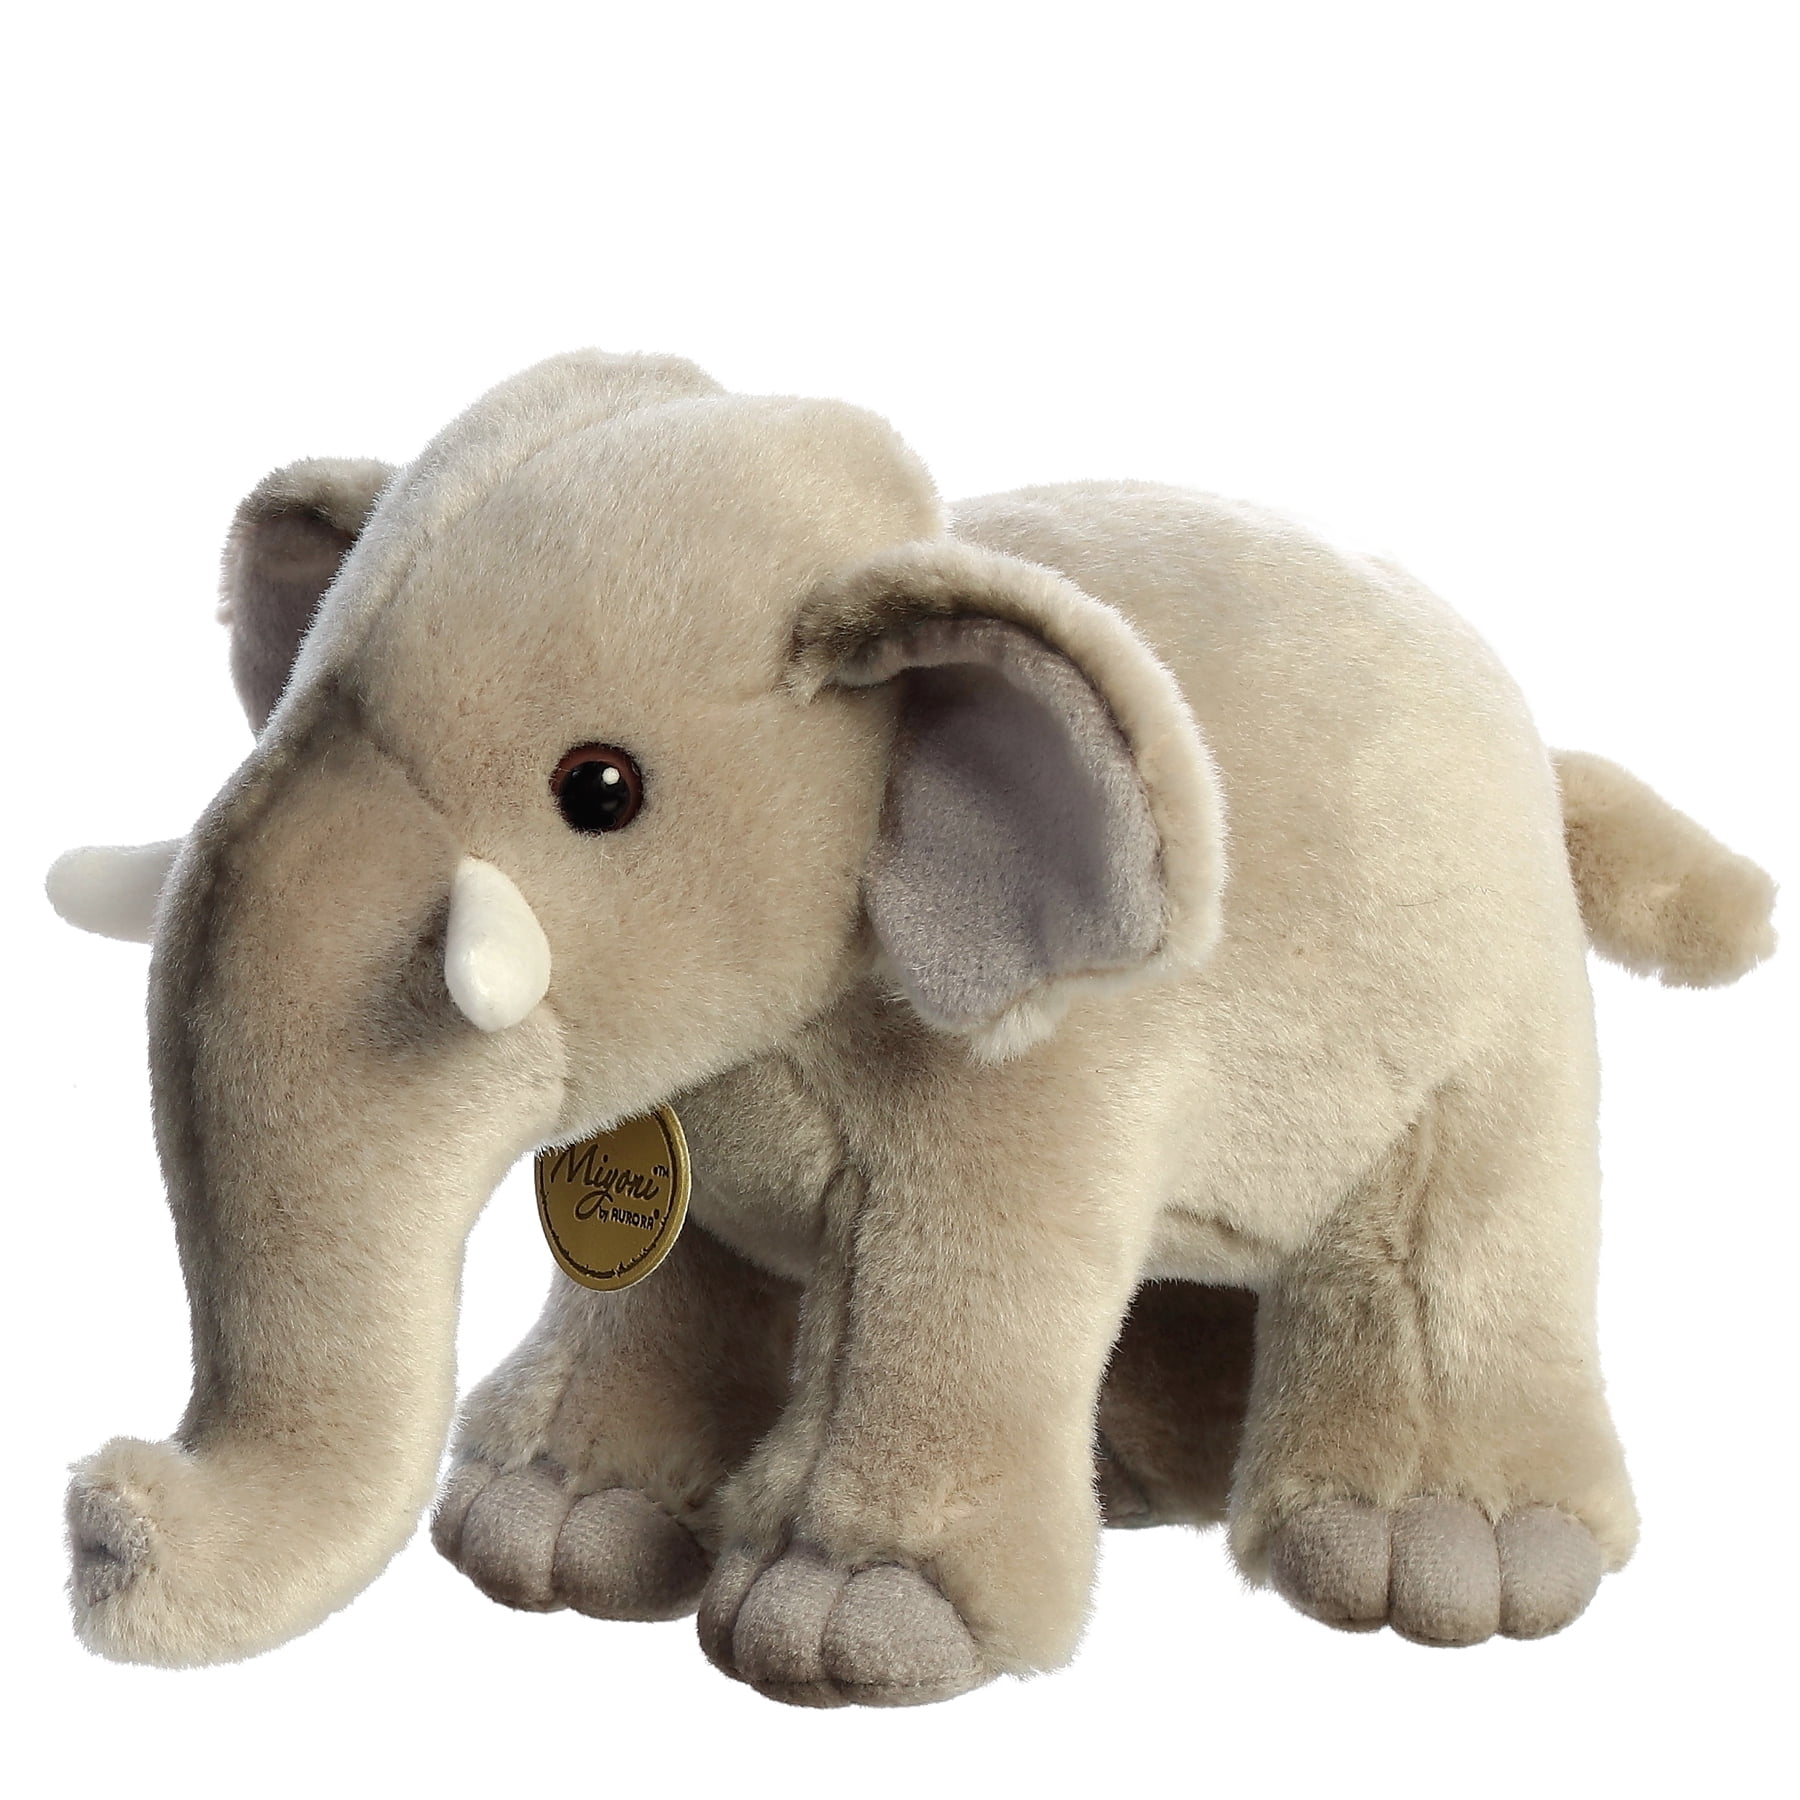 Steiff Benny Elephant Grey 8 Inch Plush Figure NEW IN STOCK 